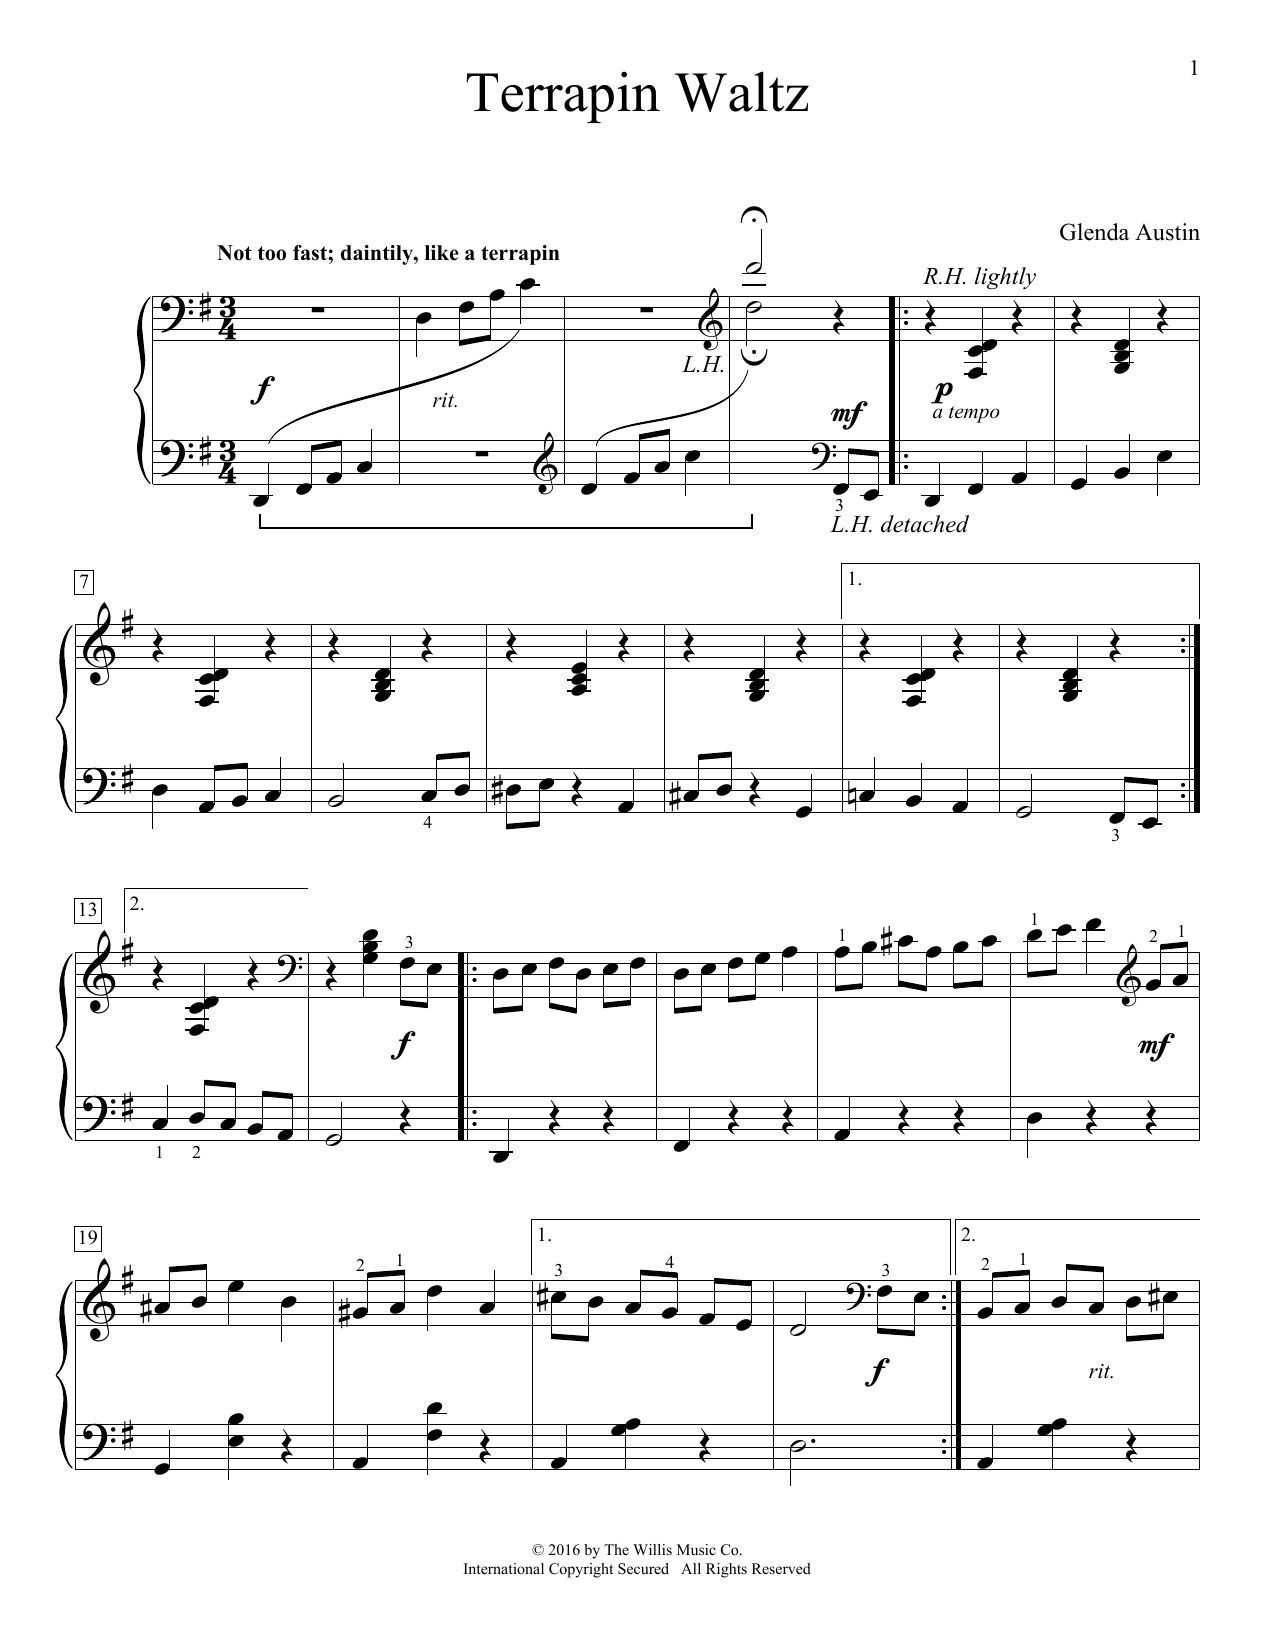 Glenda Austin Terrapin Waltz Sheet Music Notes & Chords for Piano - Download or Print PDF